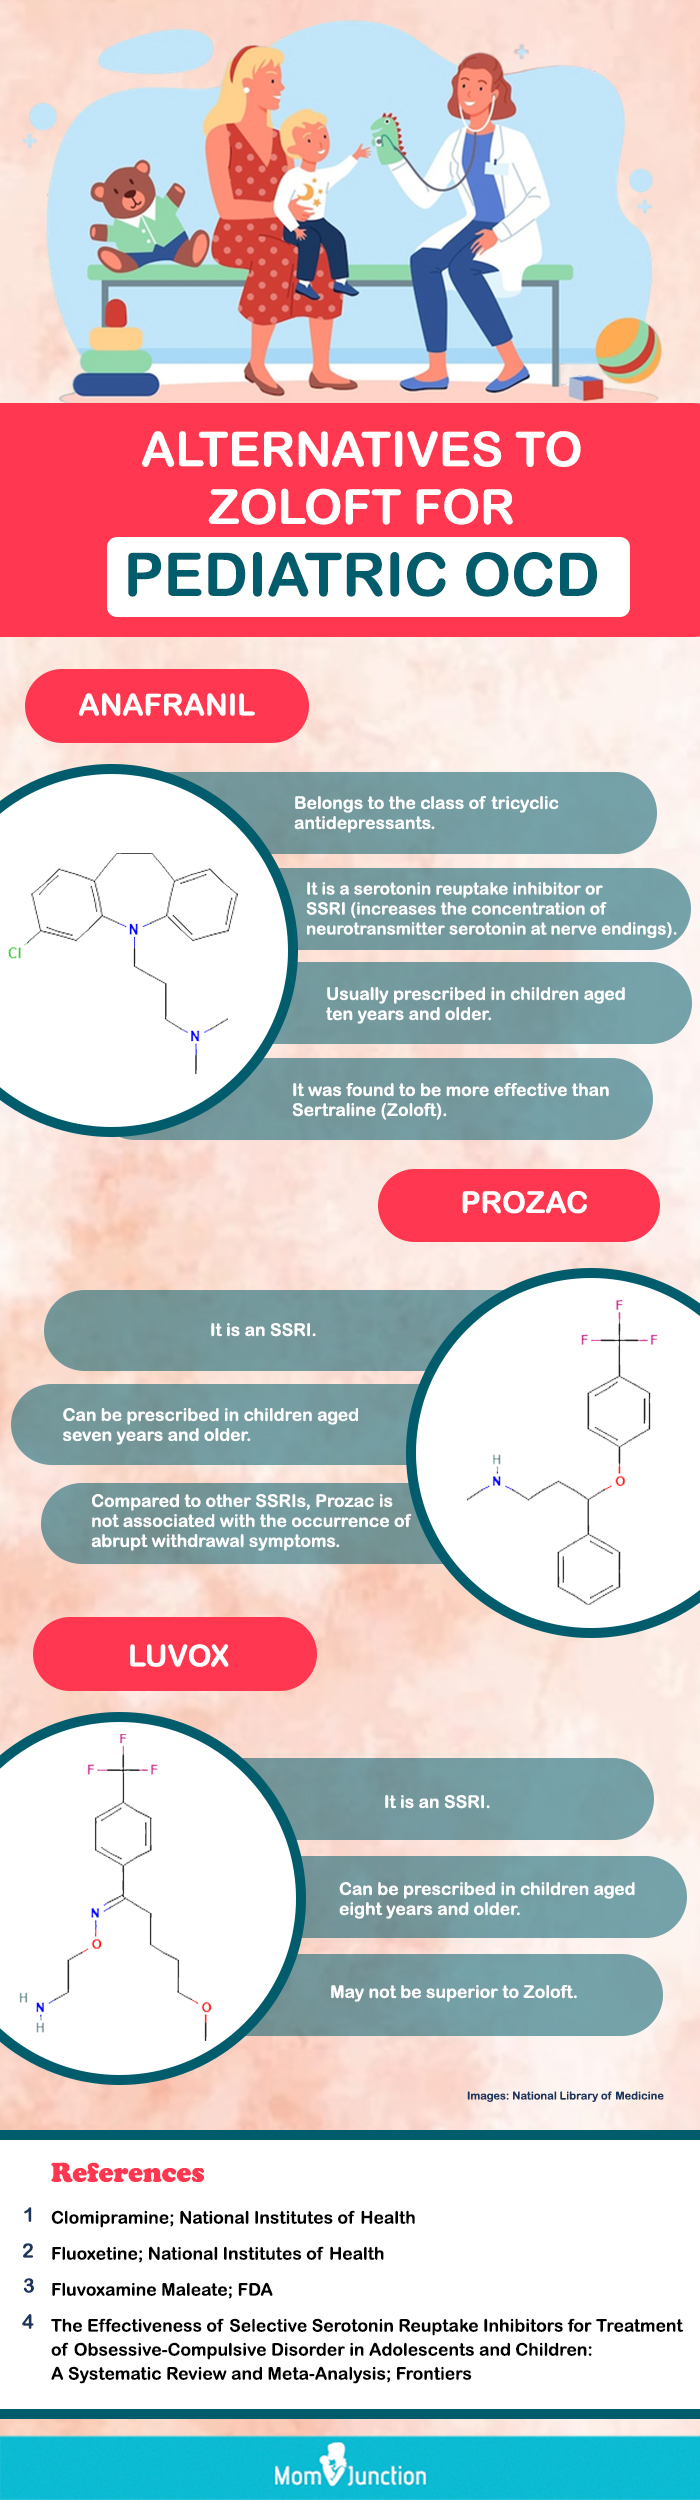 alternatives to zoloft for pediatric ocd (infographic)